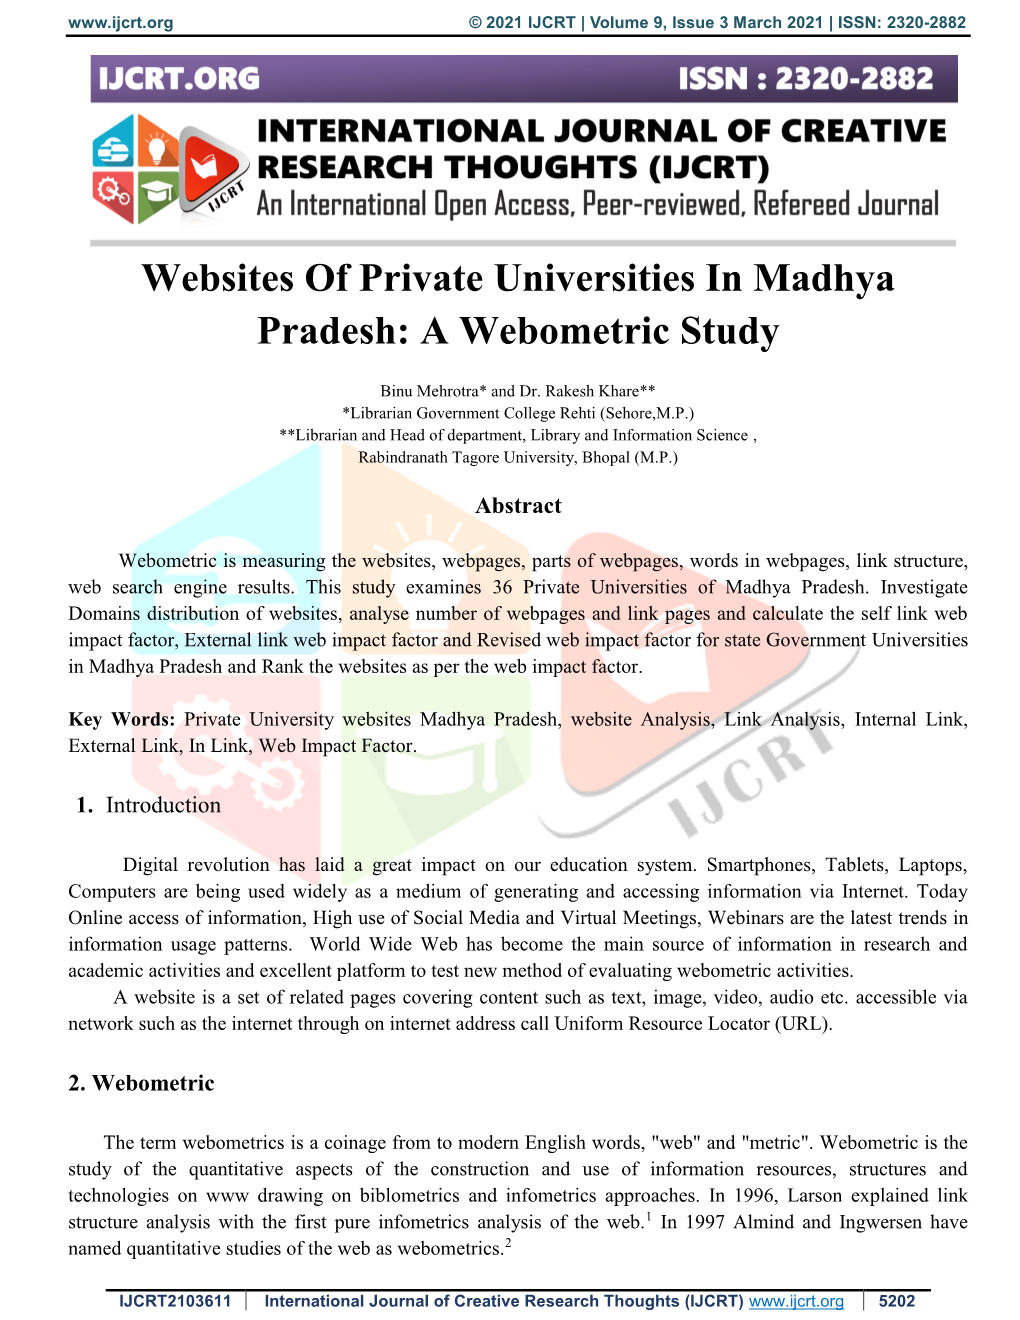 Websites of Private Universities in Madhya Pradesh: a Webometric Study